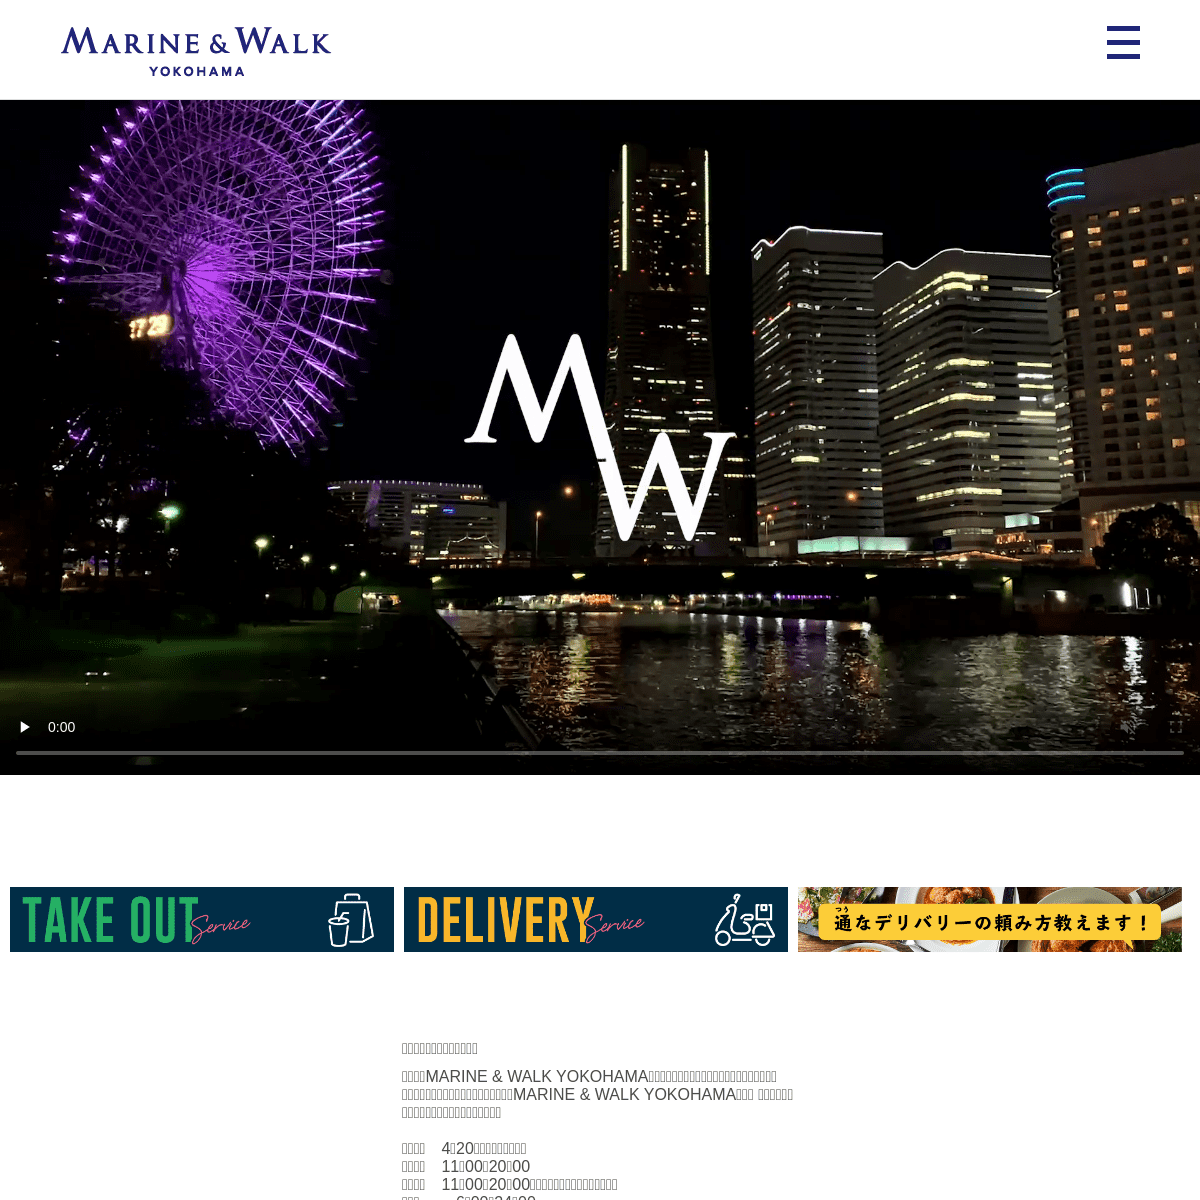 A complete backup of https://marineandwalk.jp